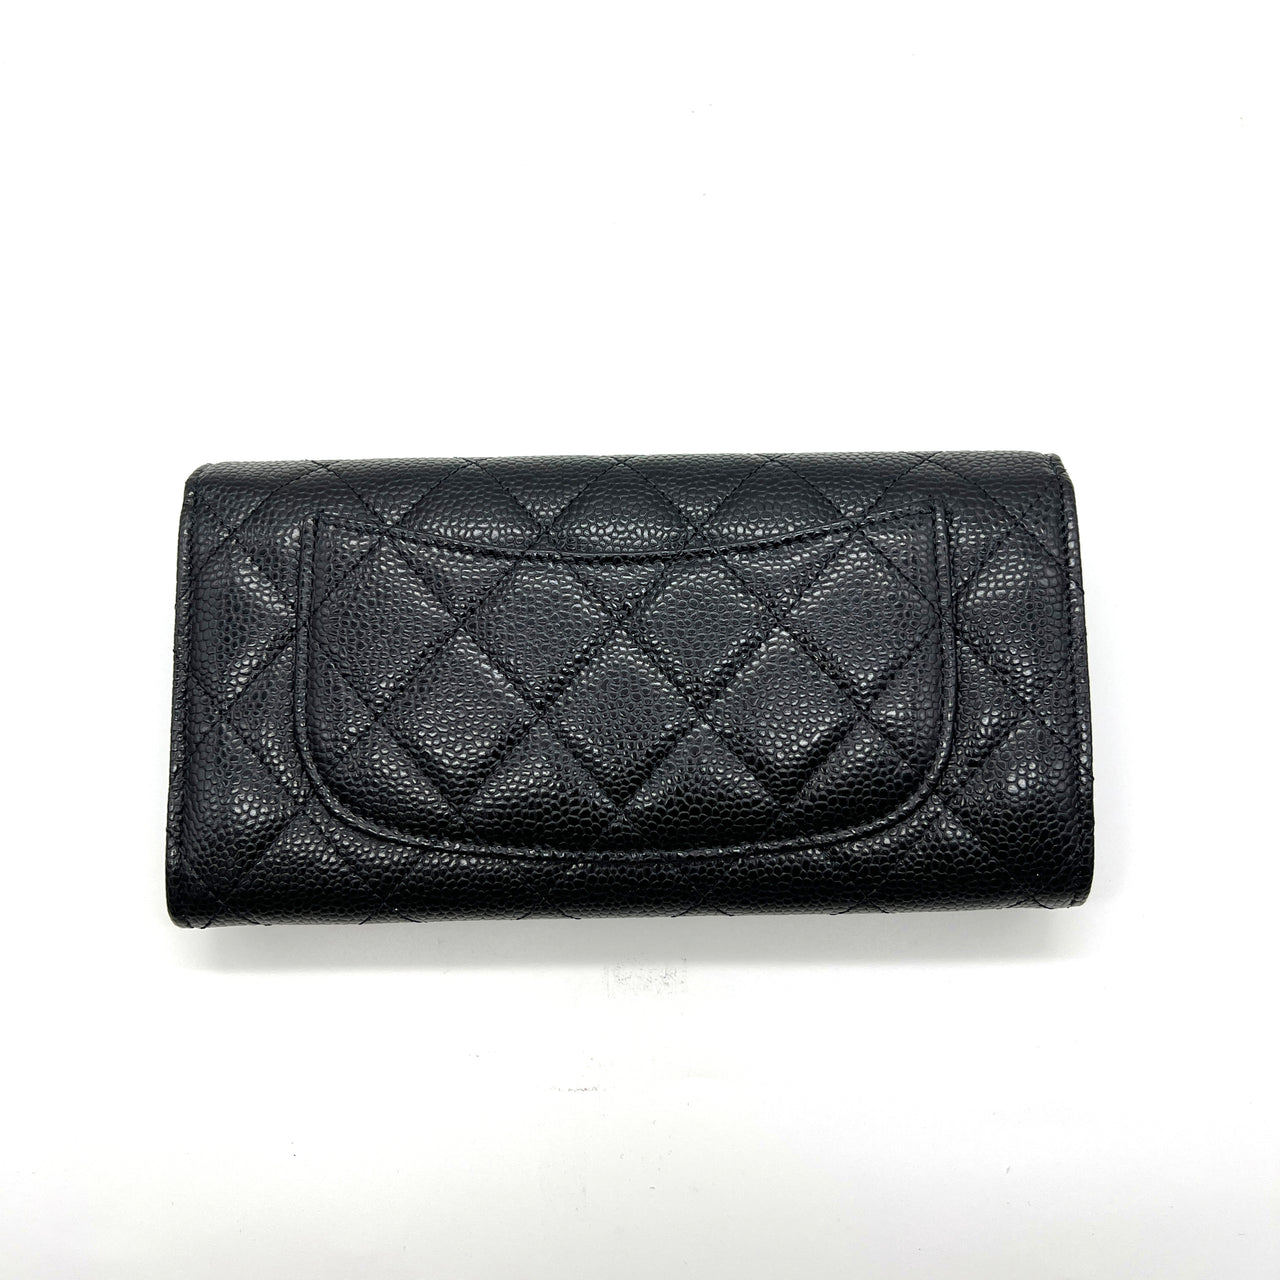 Hong Kong Stock - Chanel Classic Long Flap Wallet (black/gold tone)